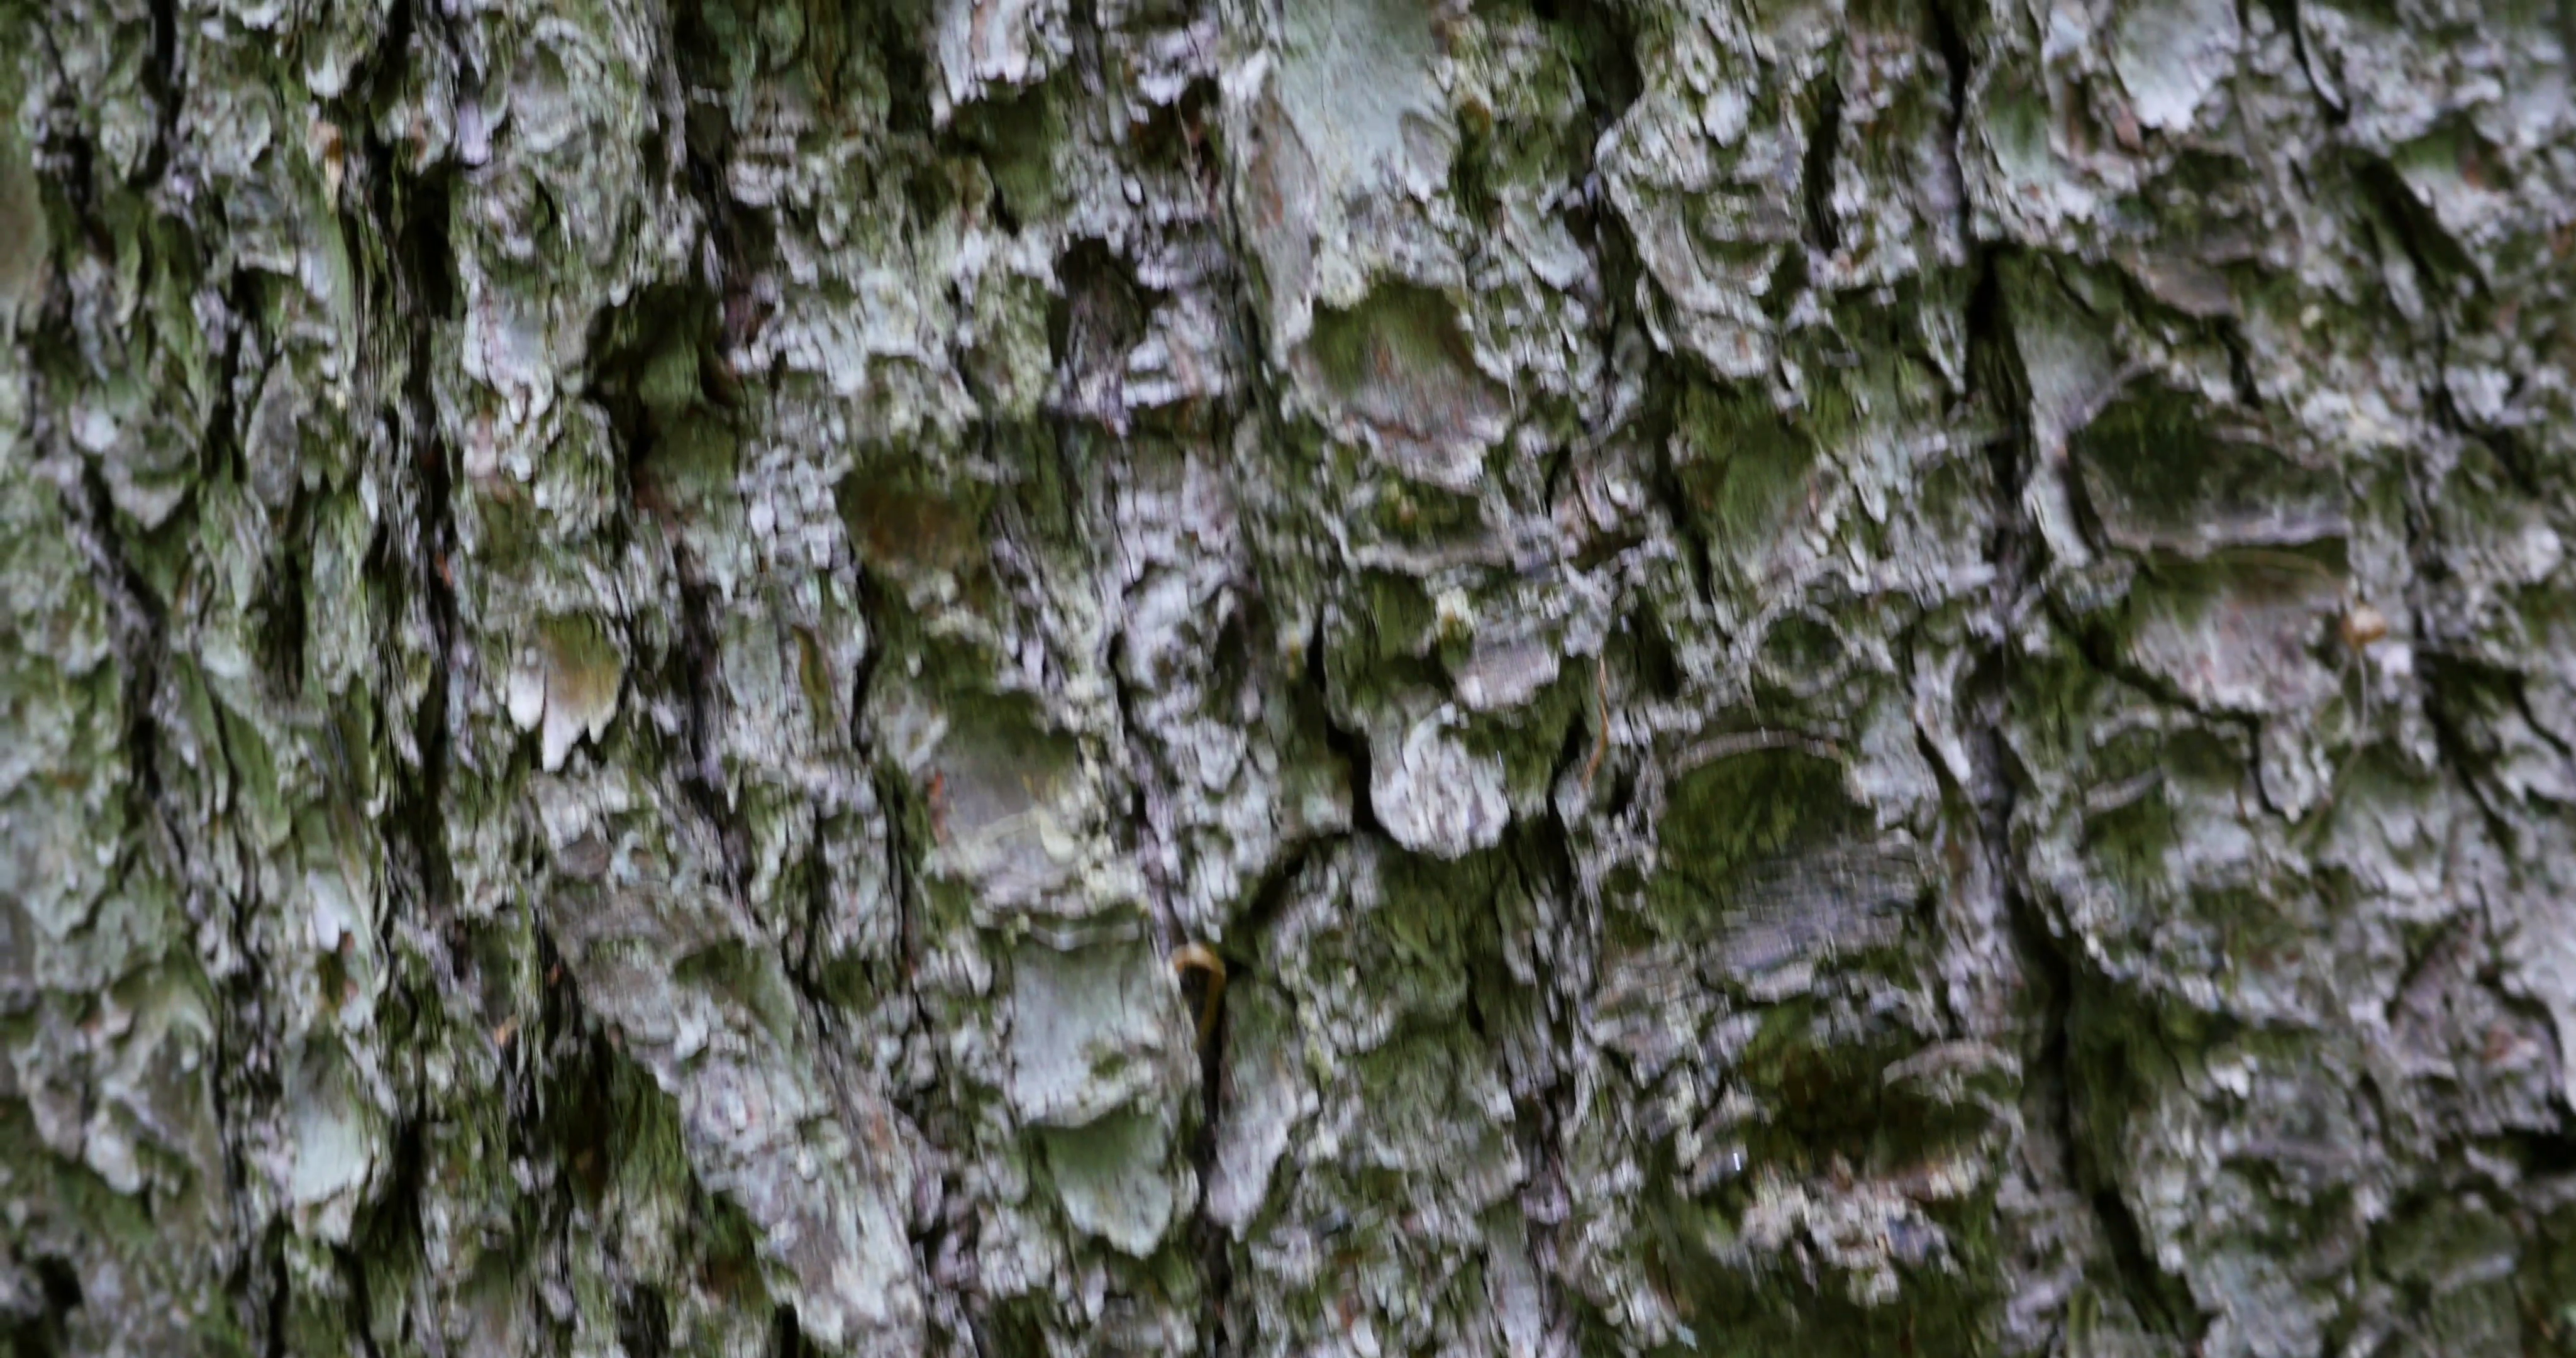 Tree Bark In The Forest 4k Stock Video Footage - VideoBlocks